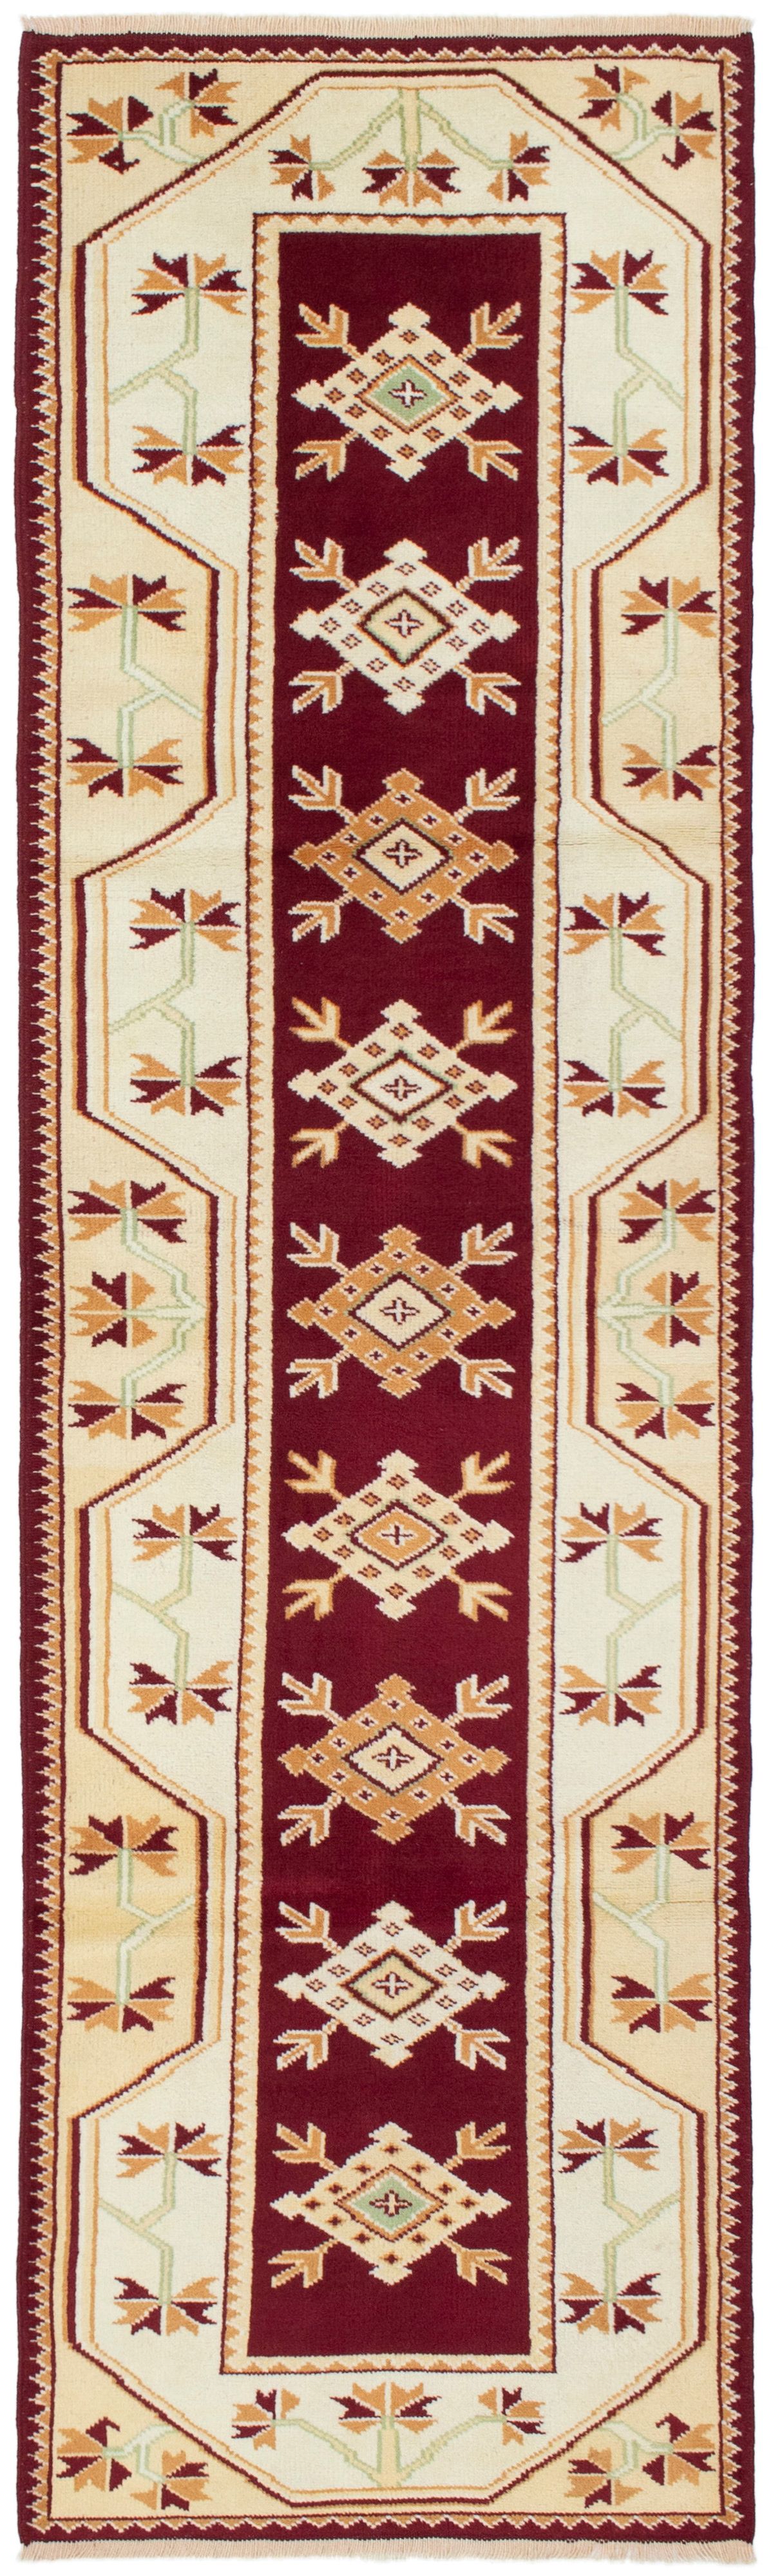 Hand-knotted Ushak Cream, Dark Red Wool Rug 2'9" x 9'4" Size: 2'9" x 9'4"  